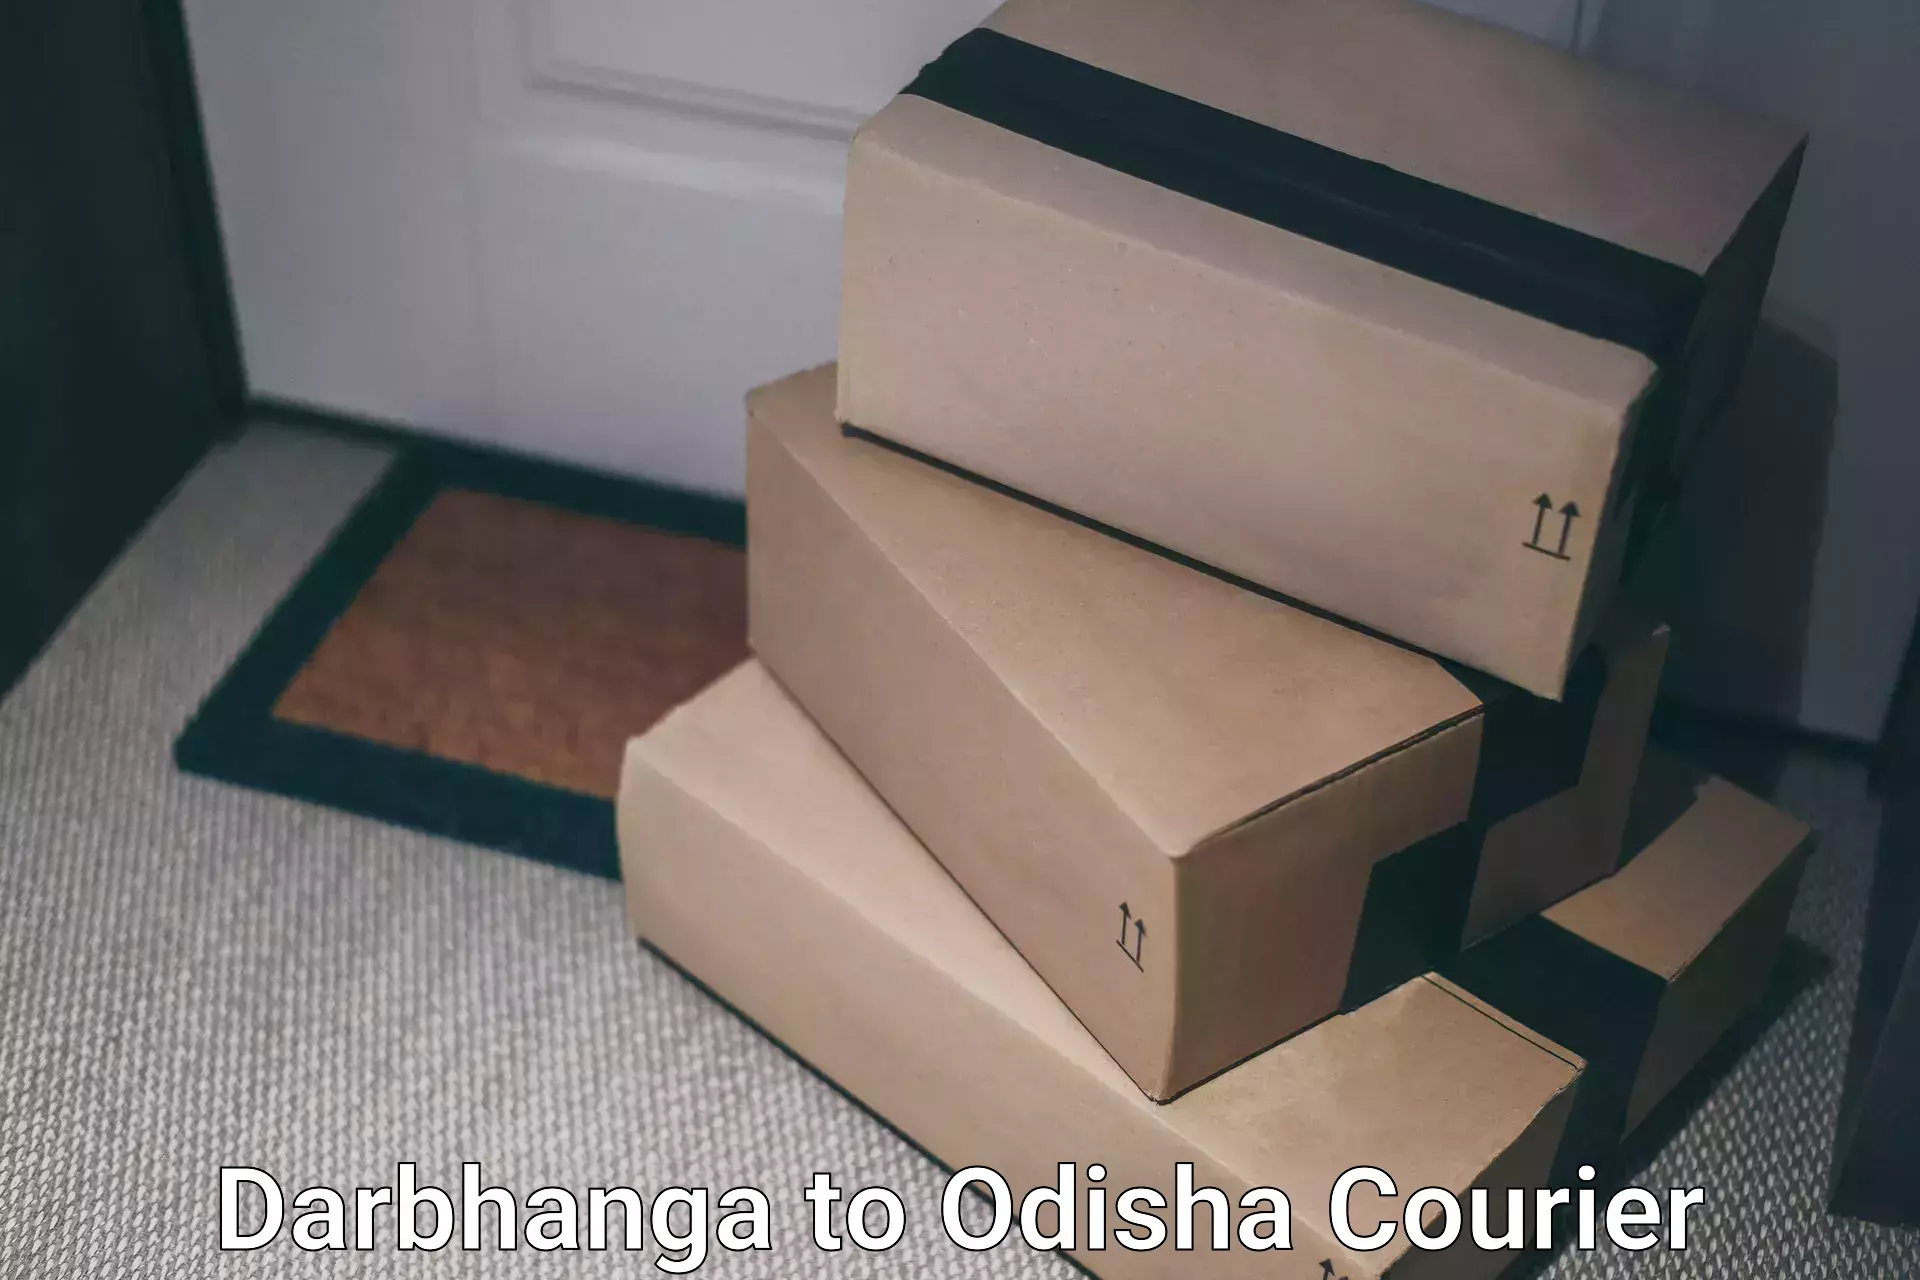 User-friendly courier app Darbhanga to Odisha